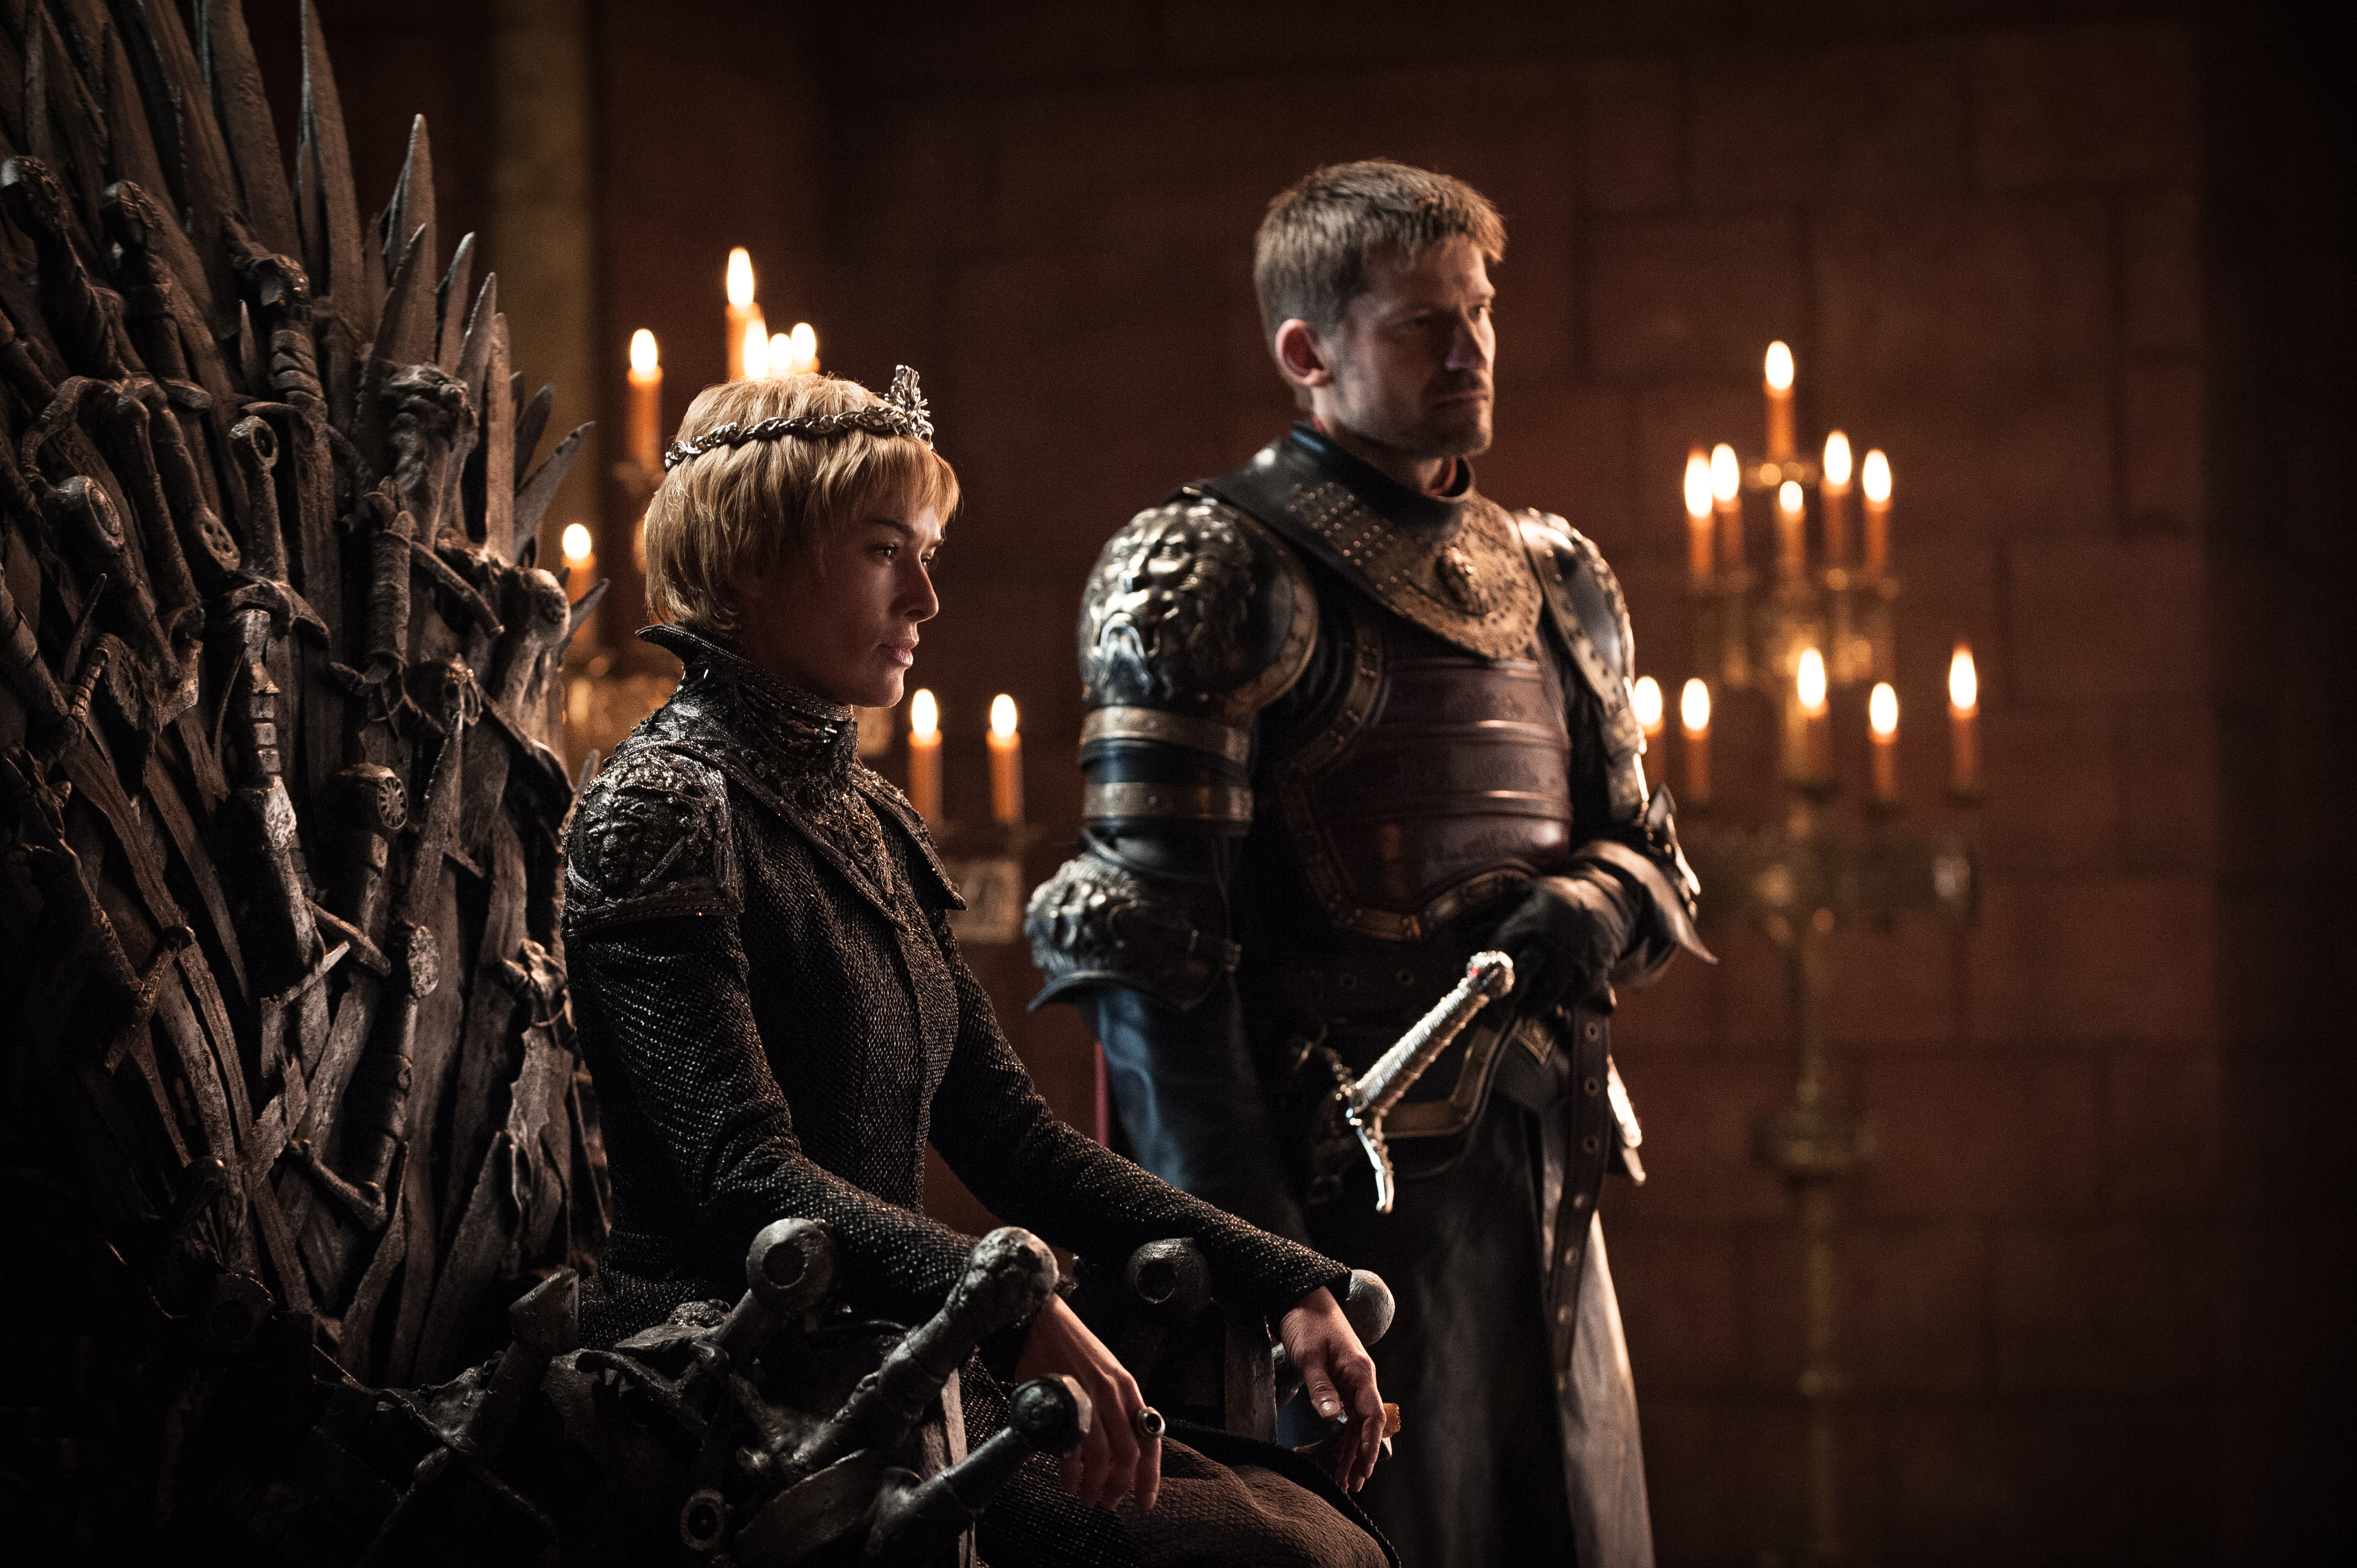 Lena Headey as Cersei Lannister and Nikolaj Coster-Waldau as Jaime Lannister. Credit - Helen Sloan_HBO